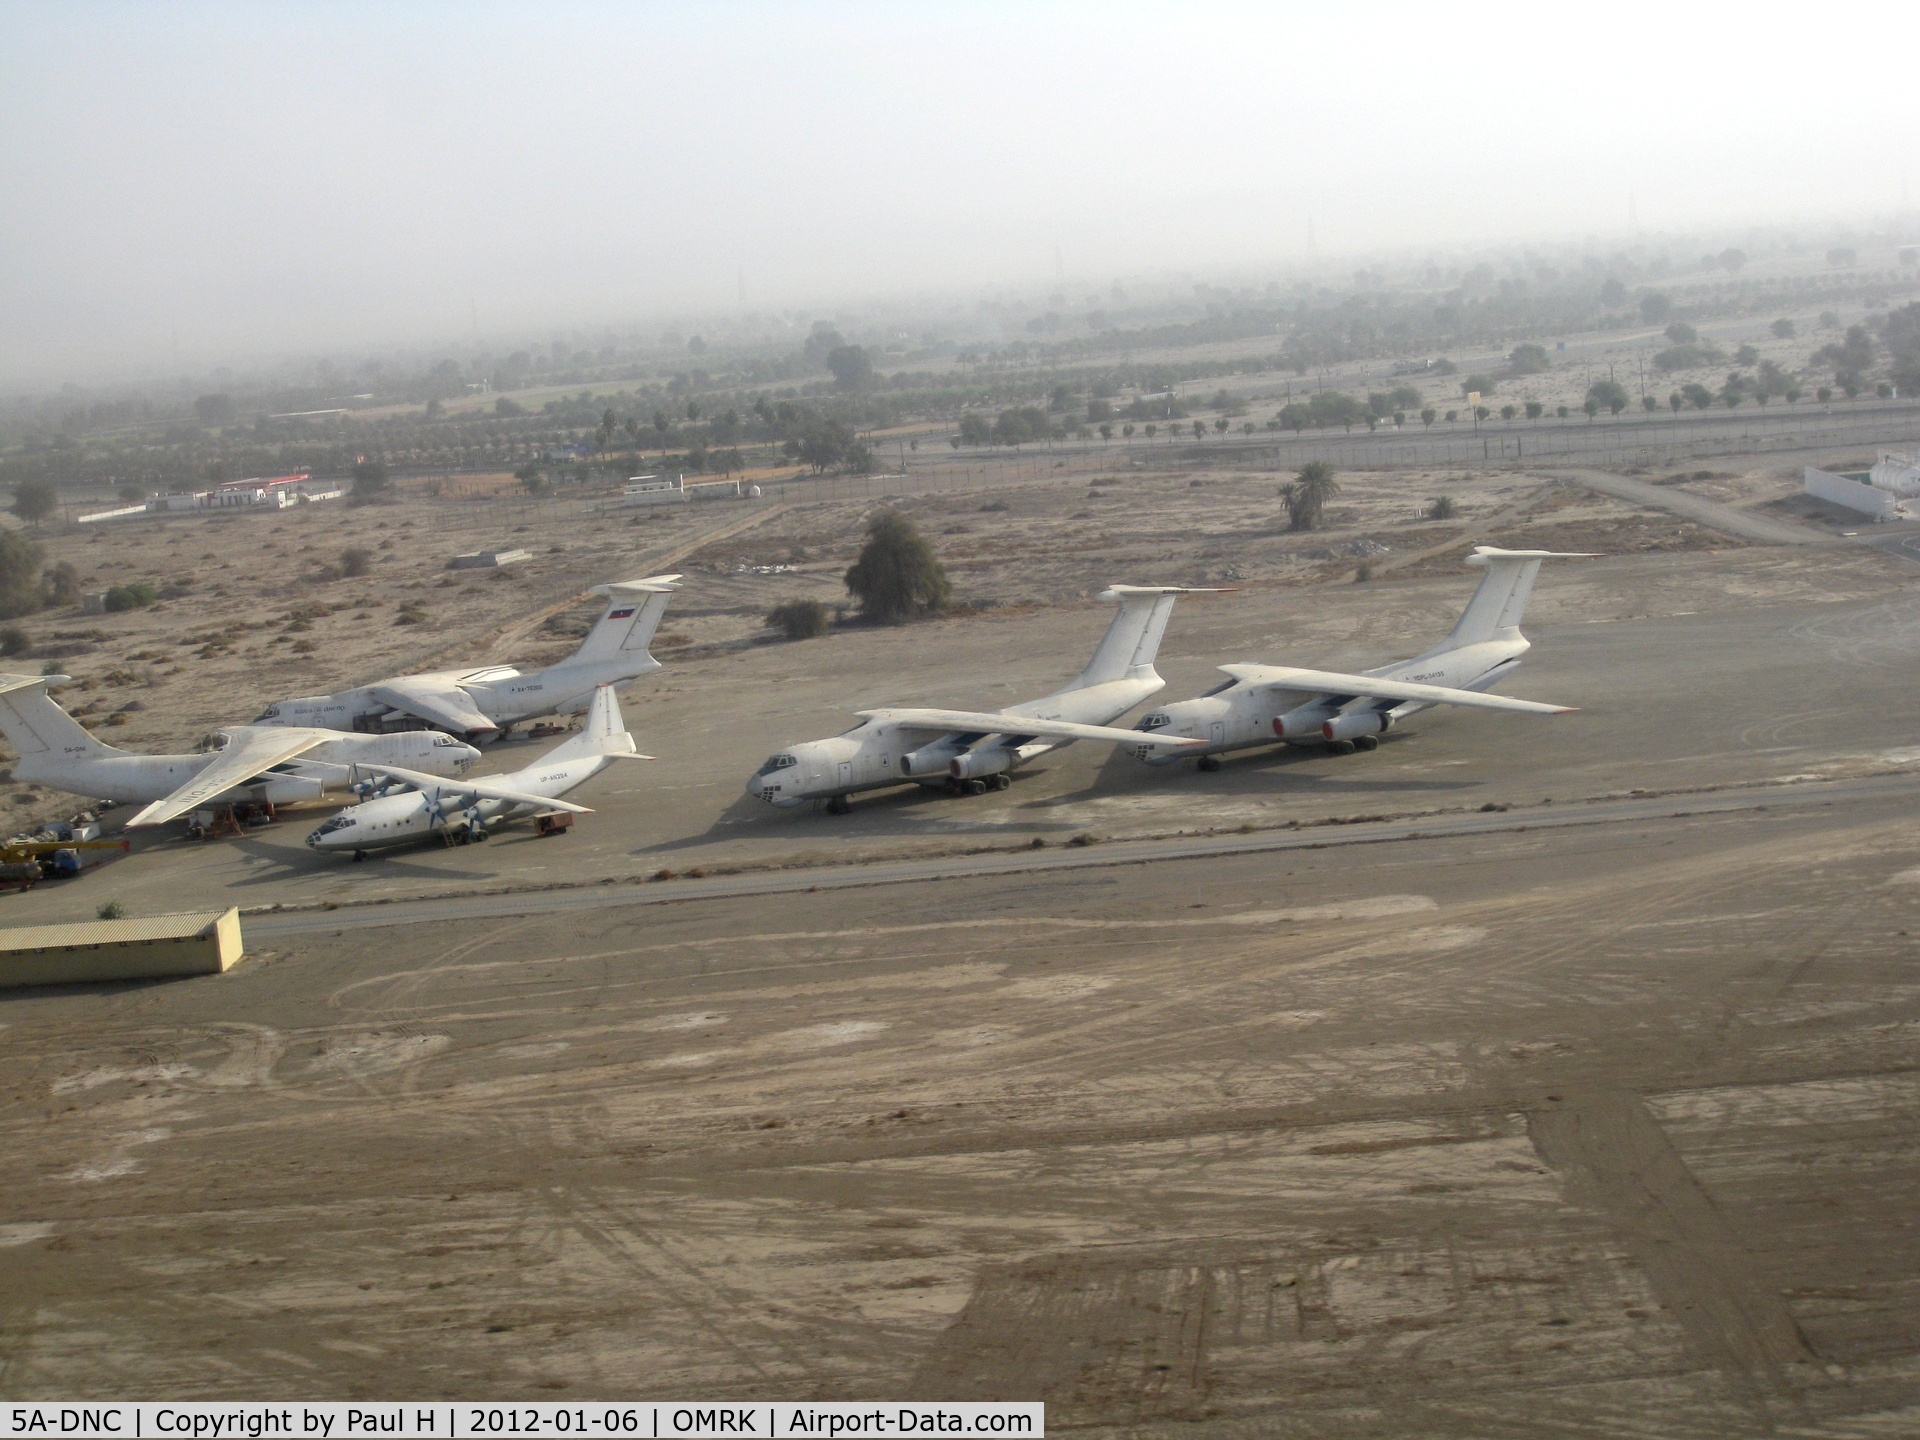 5A-DNC, Ilyushin IL76TD C/N 002347084, 4 Il-76 and an An-12 at the airfield of Ras Al Khaimah (RKT) in the UAE